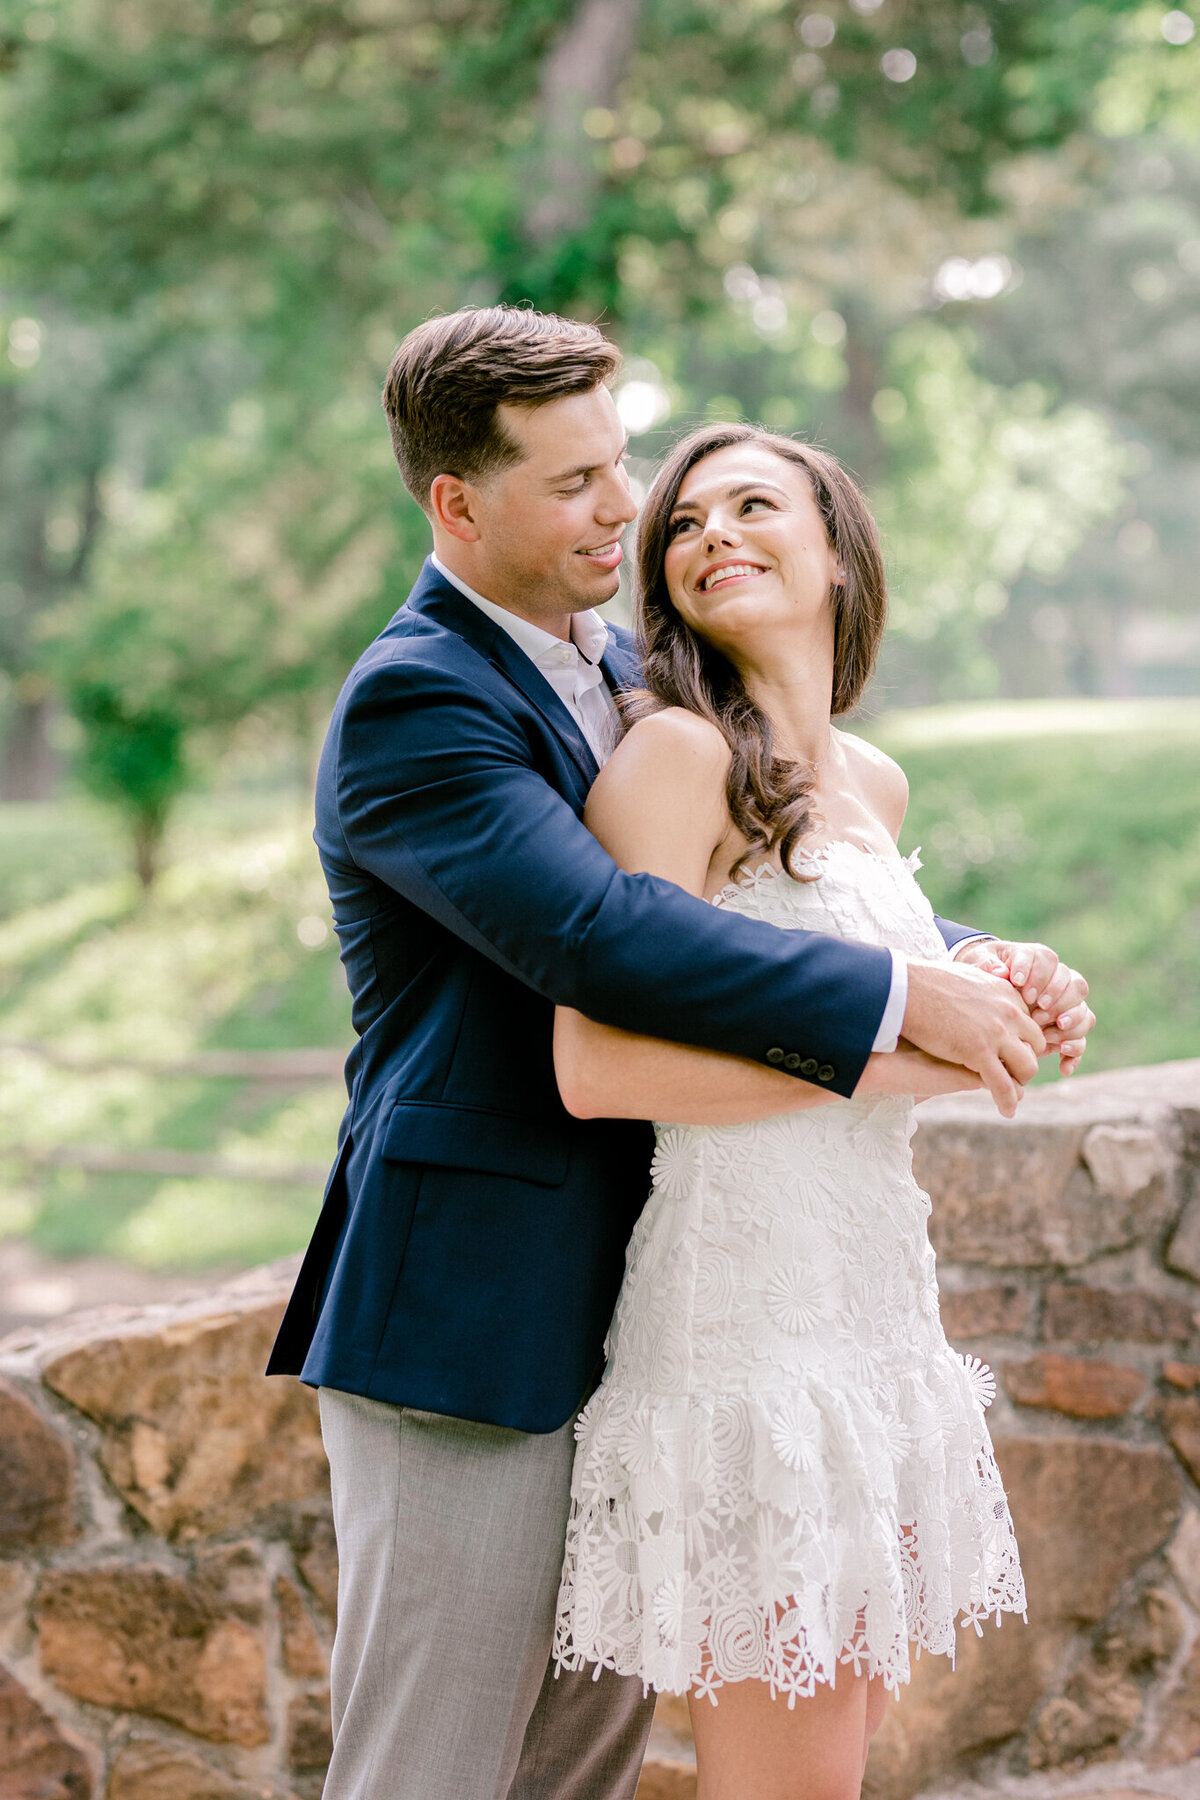 Samantha & Luke's Reverchon Park Engagement Session | Dallas Wedding Photographer | Sami Kathryn Photography-17